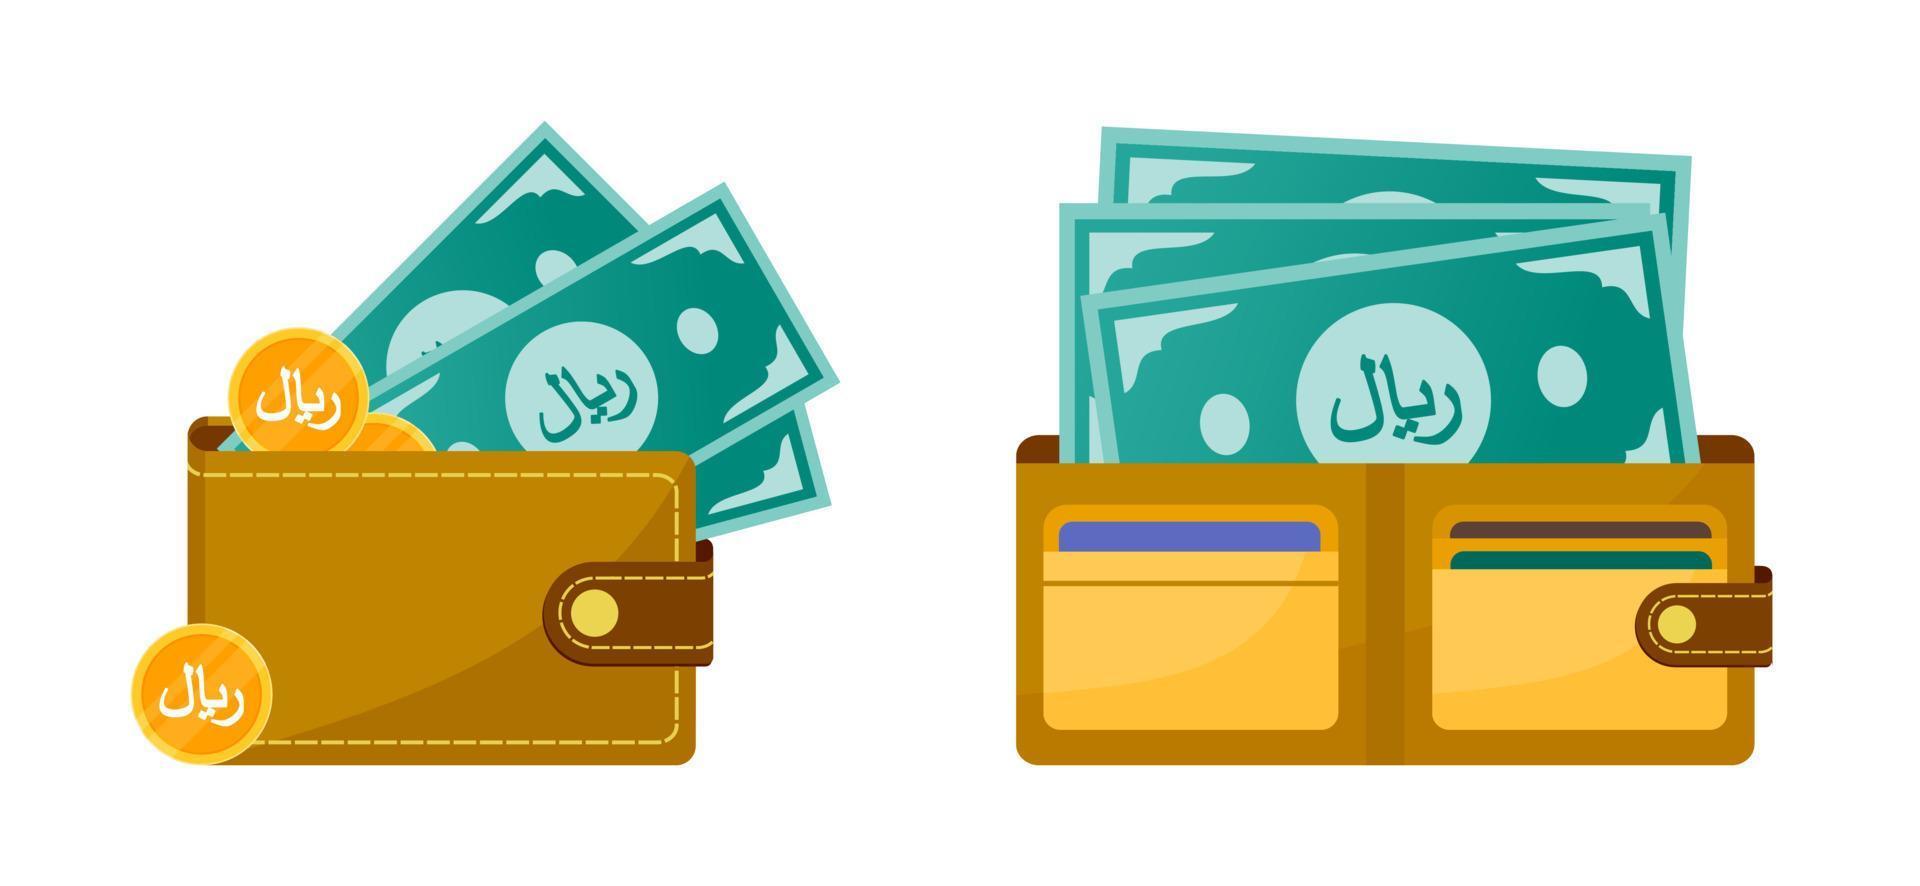 Brieftasche mit saudi-riyal-Geld vektor